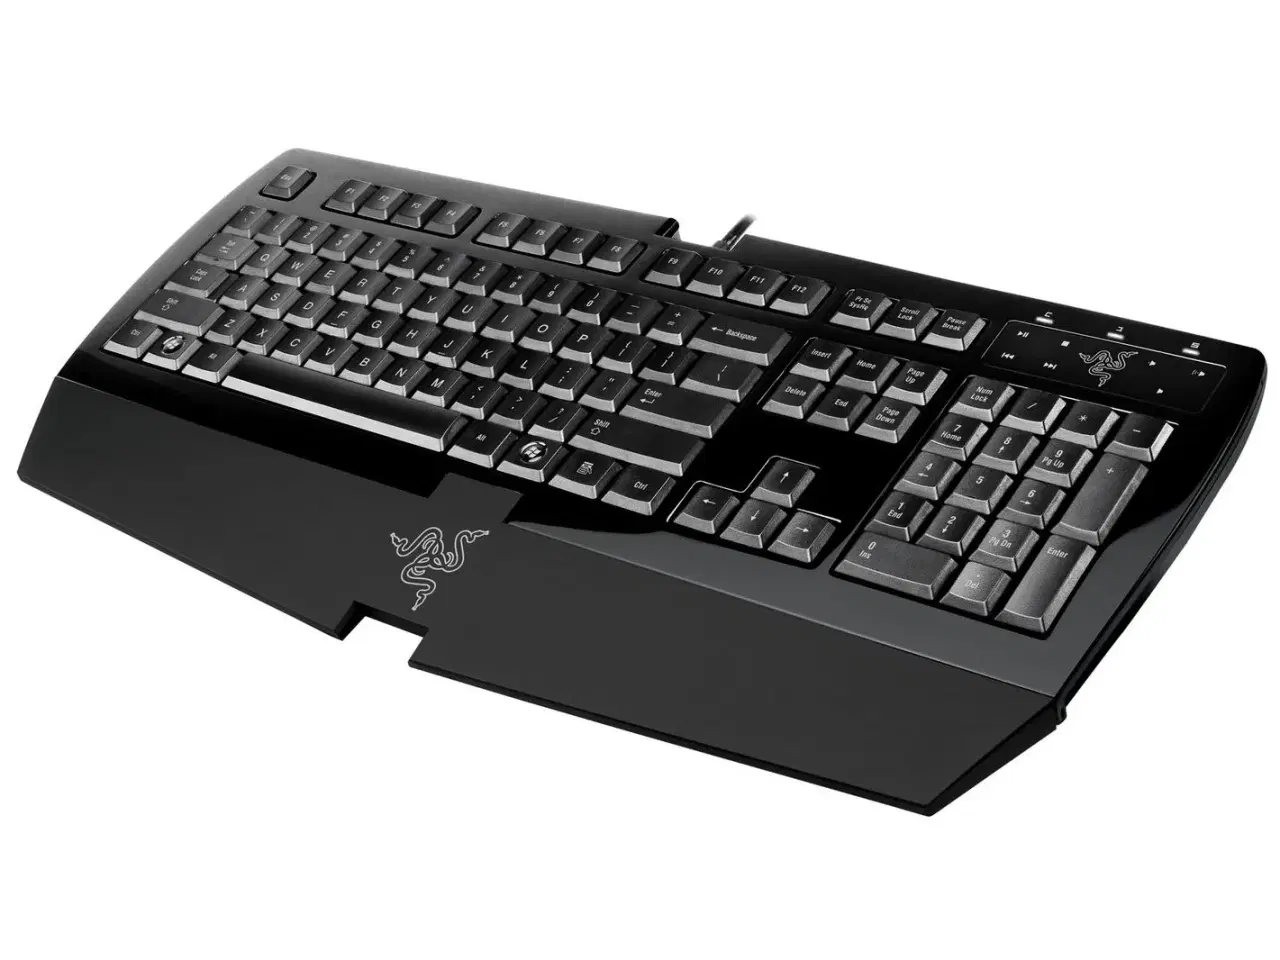 Billede 1 - Razer Arctosa Gaming Keyboard.